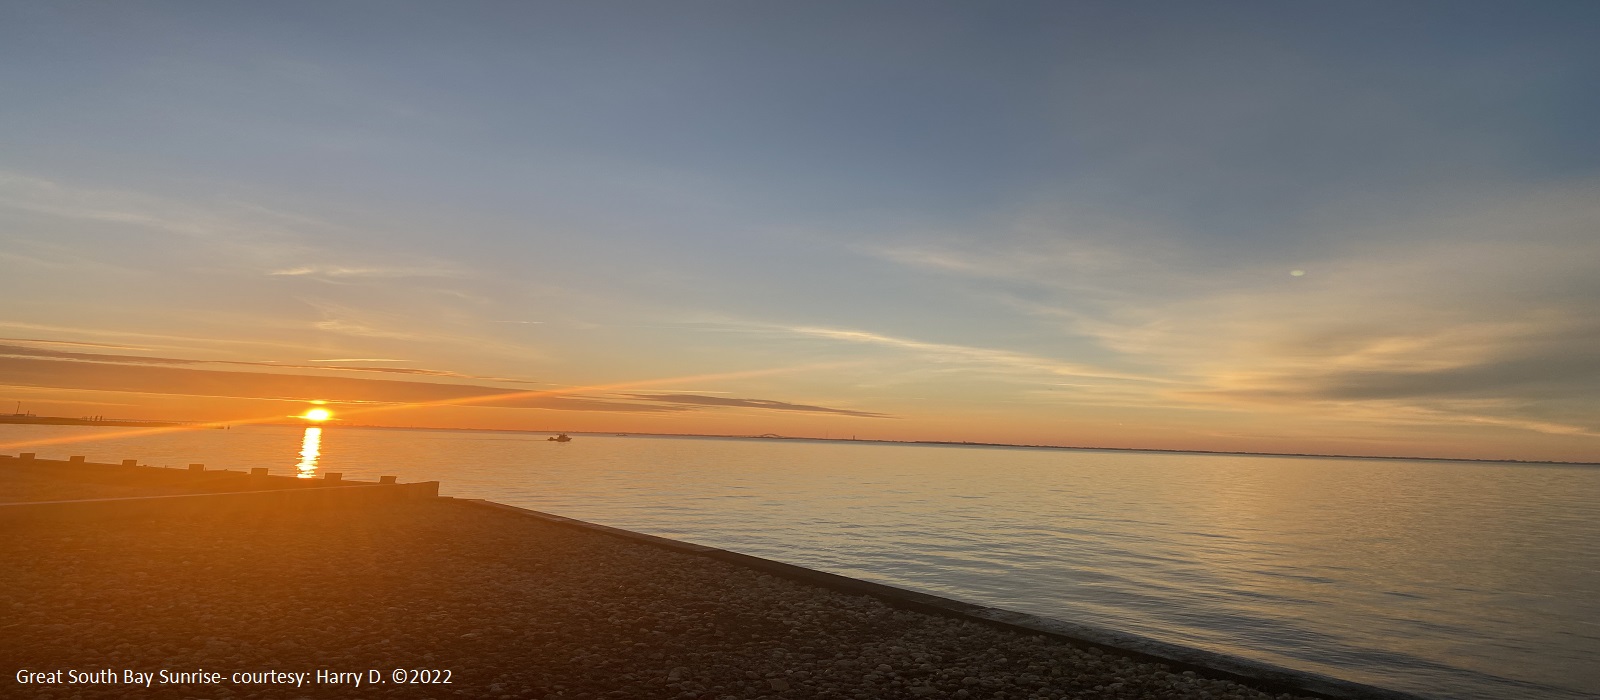 Great South Bay Sunrise- courtesy Harry D. (c)2022